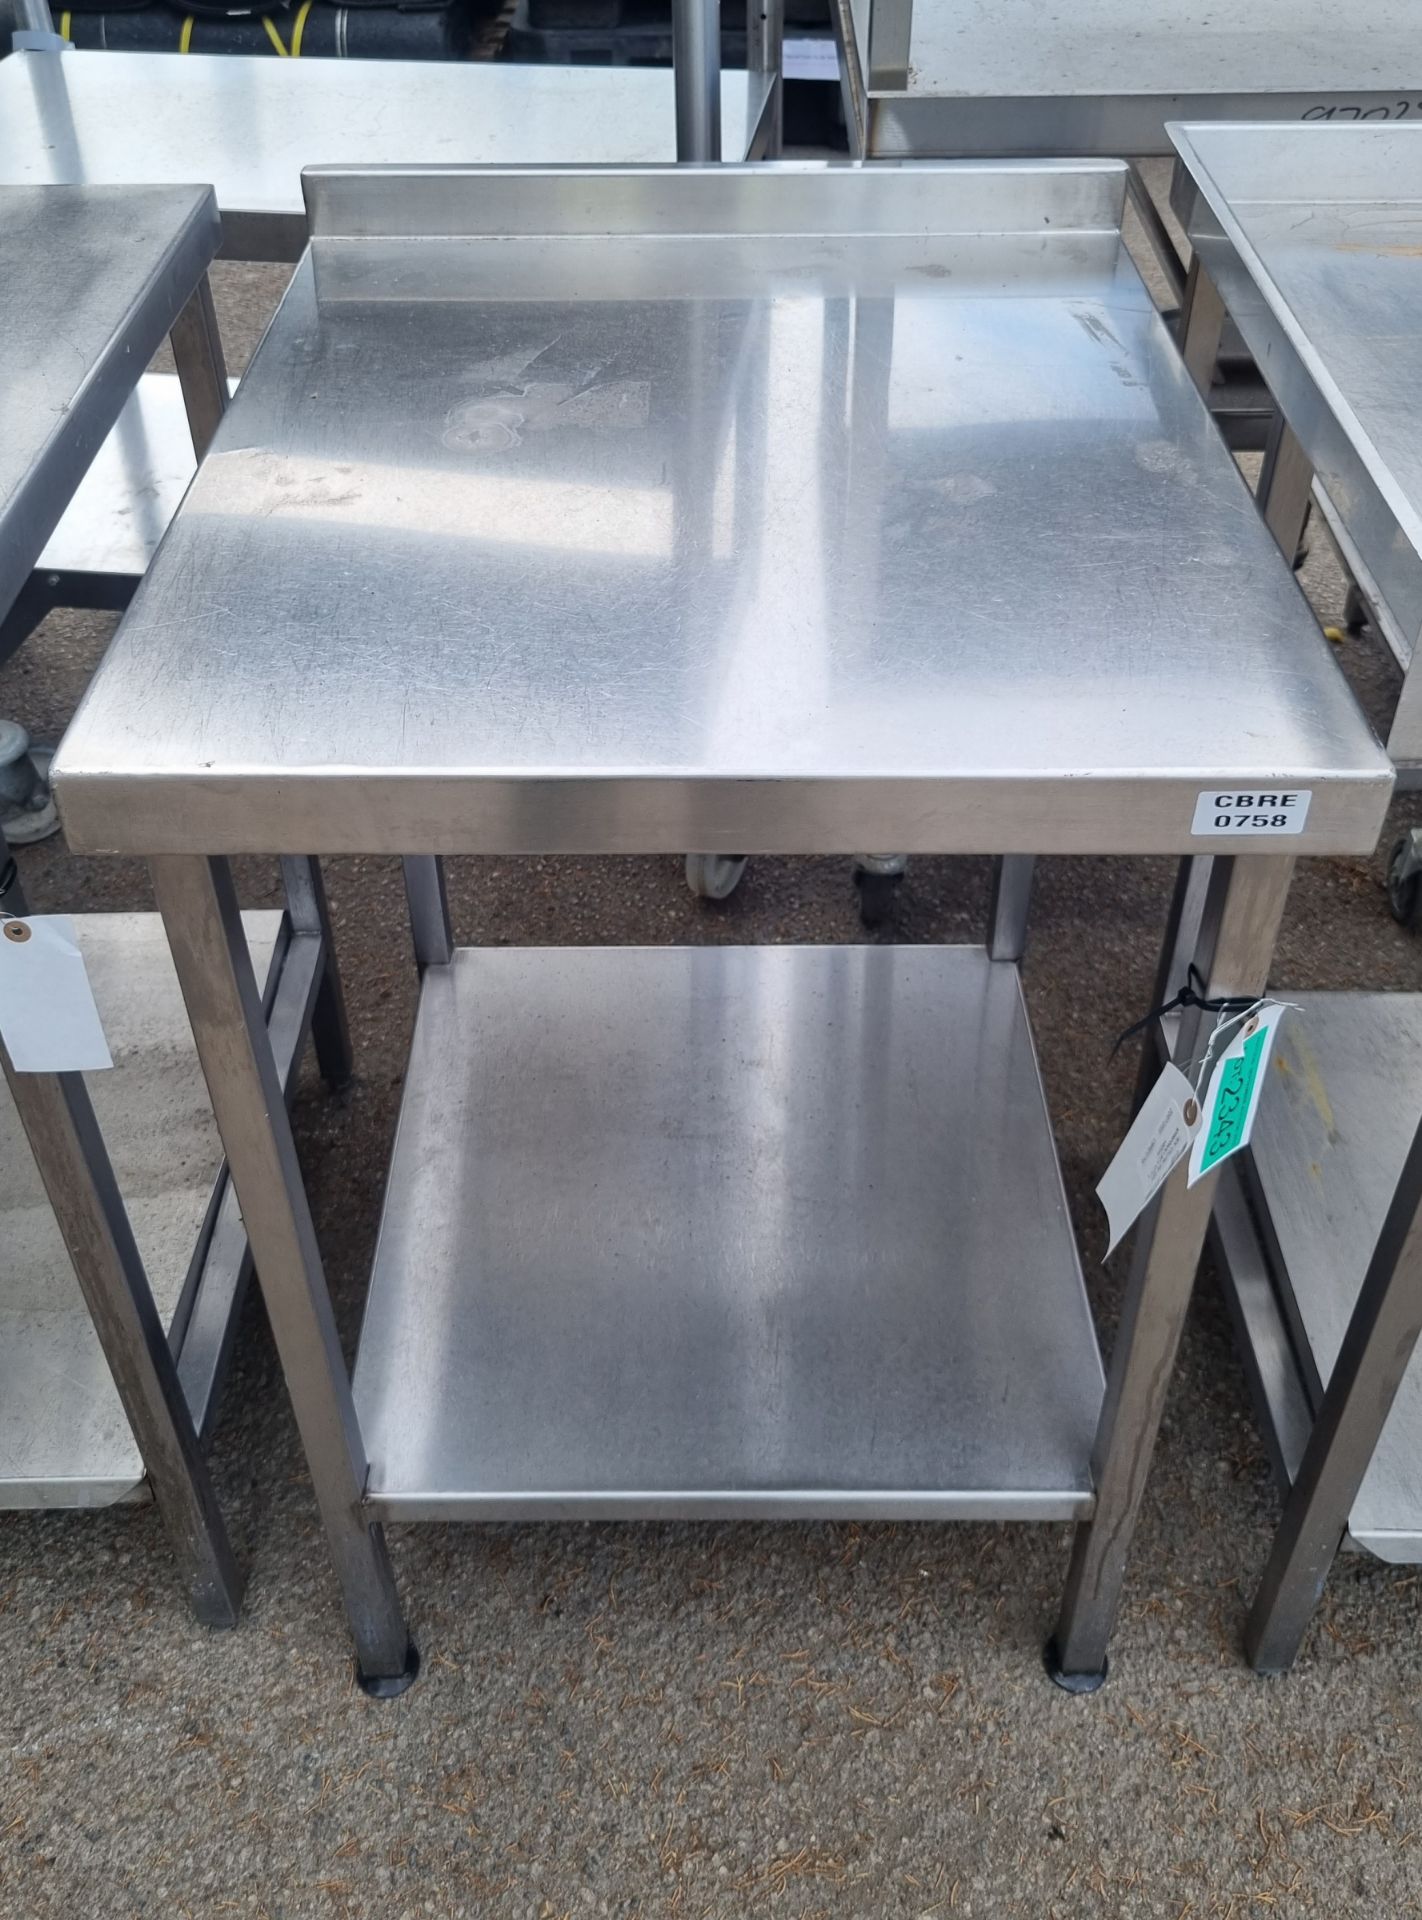 Stainless steel worktop 600 x 700 x 870